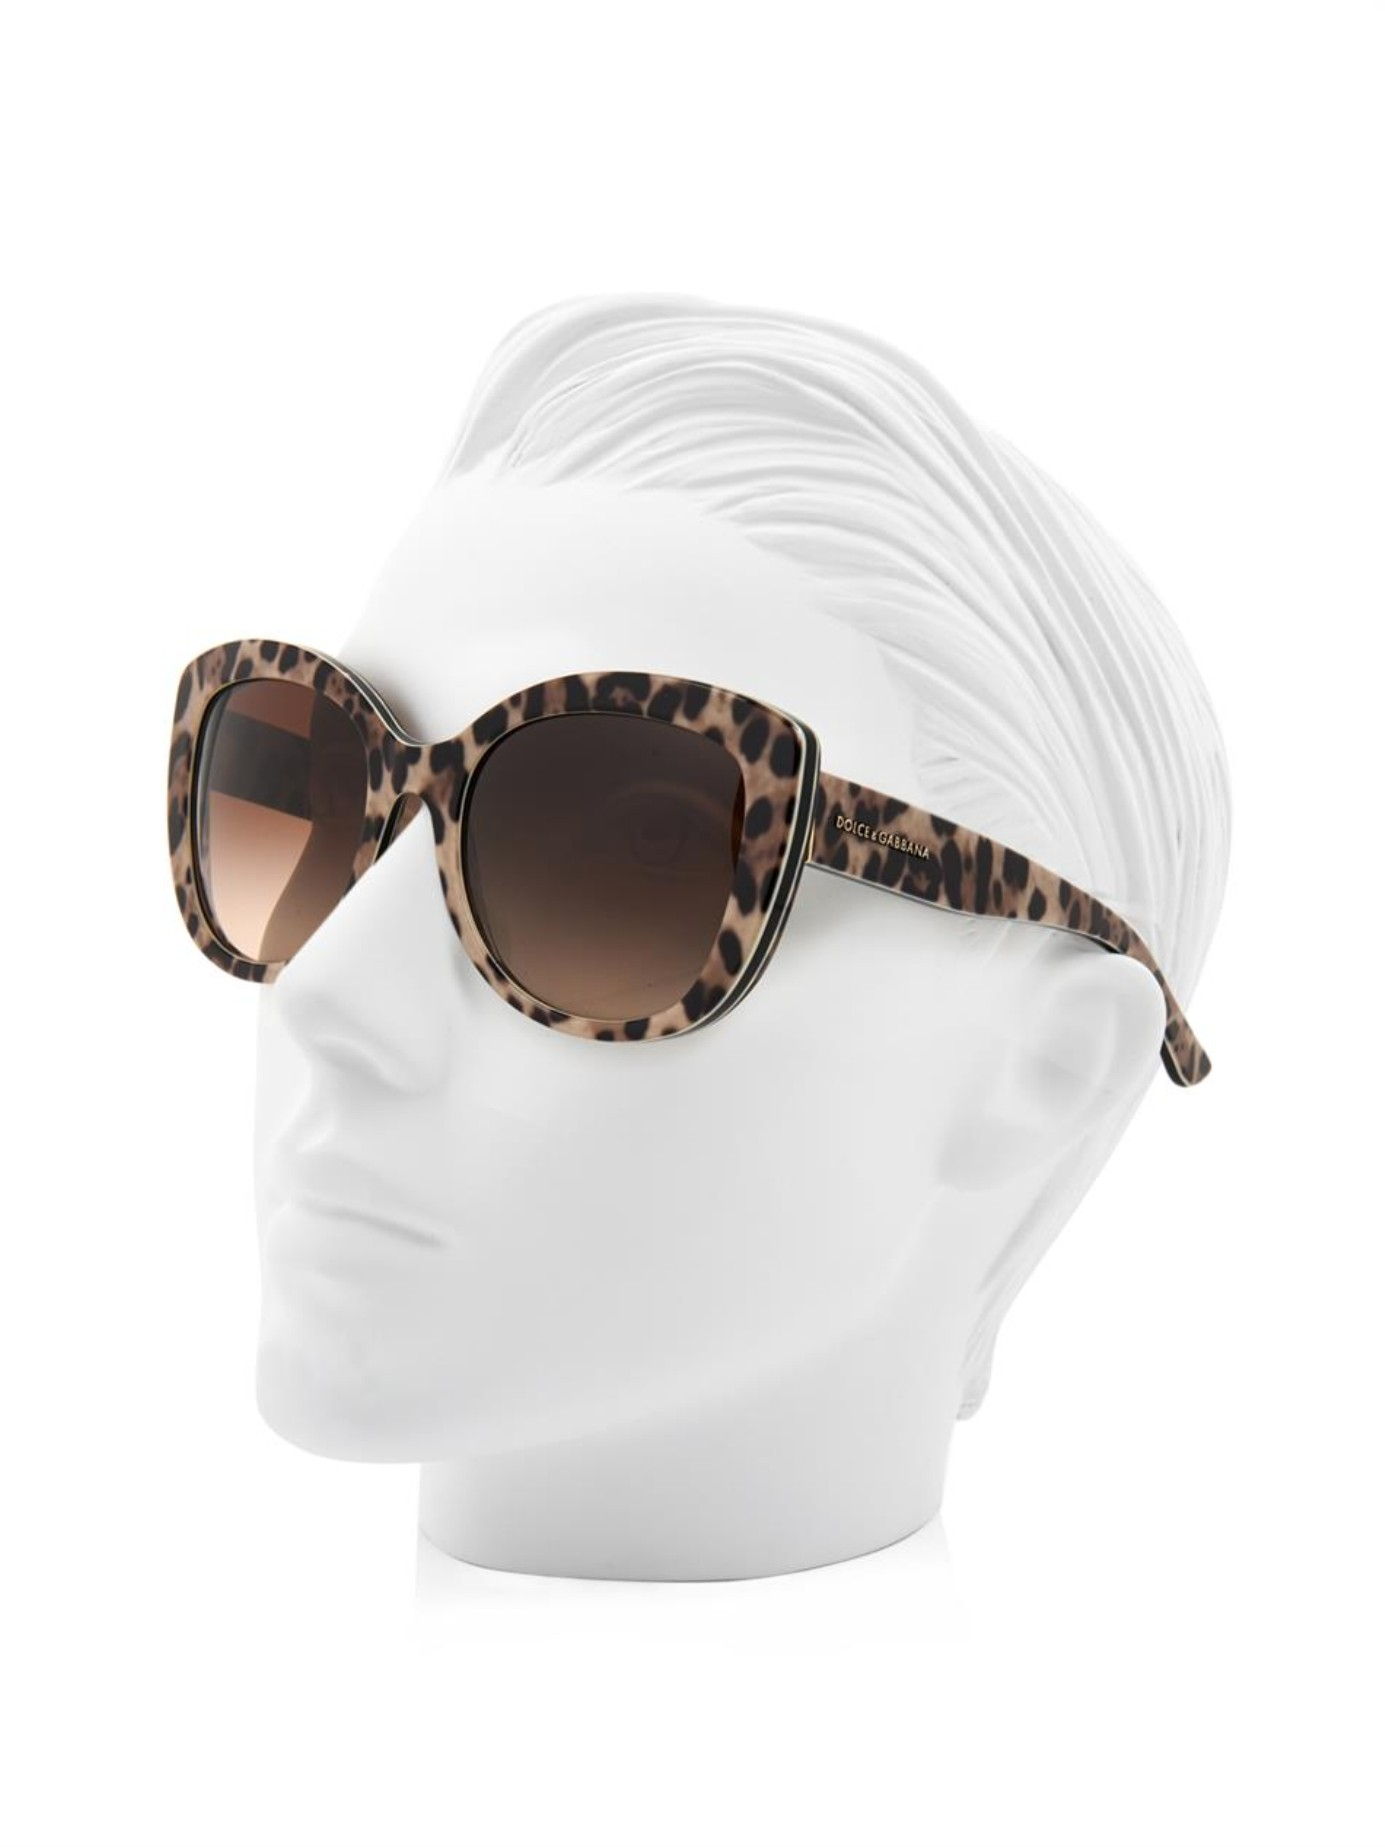 Dolce & Gabbana Leopard-Print Cat-Eye Sunglasses - Lyst